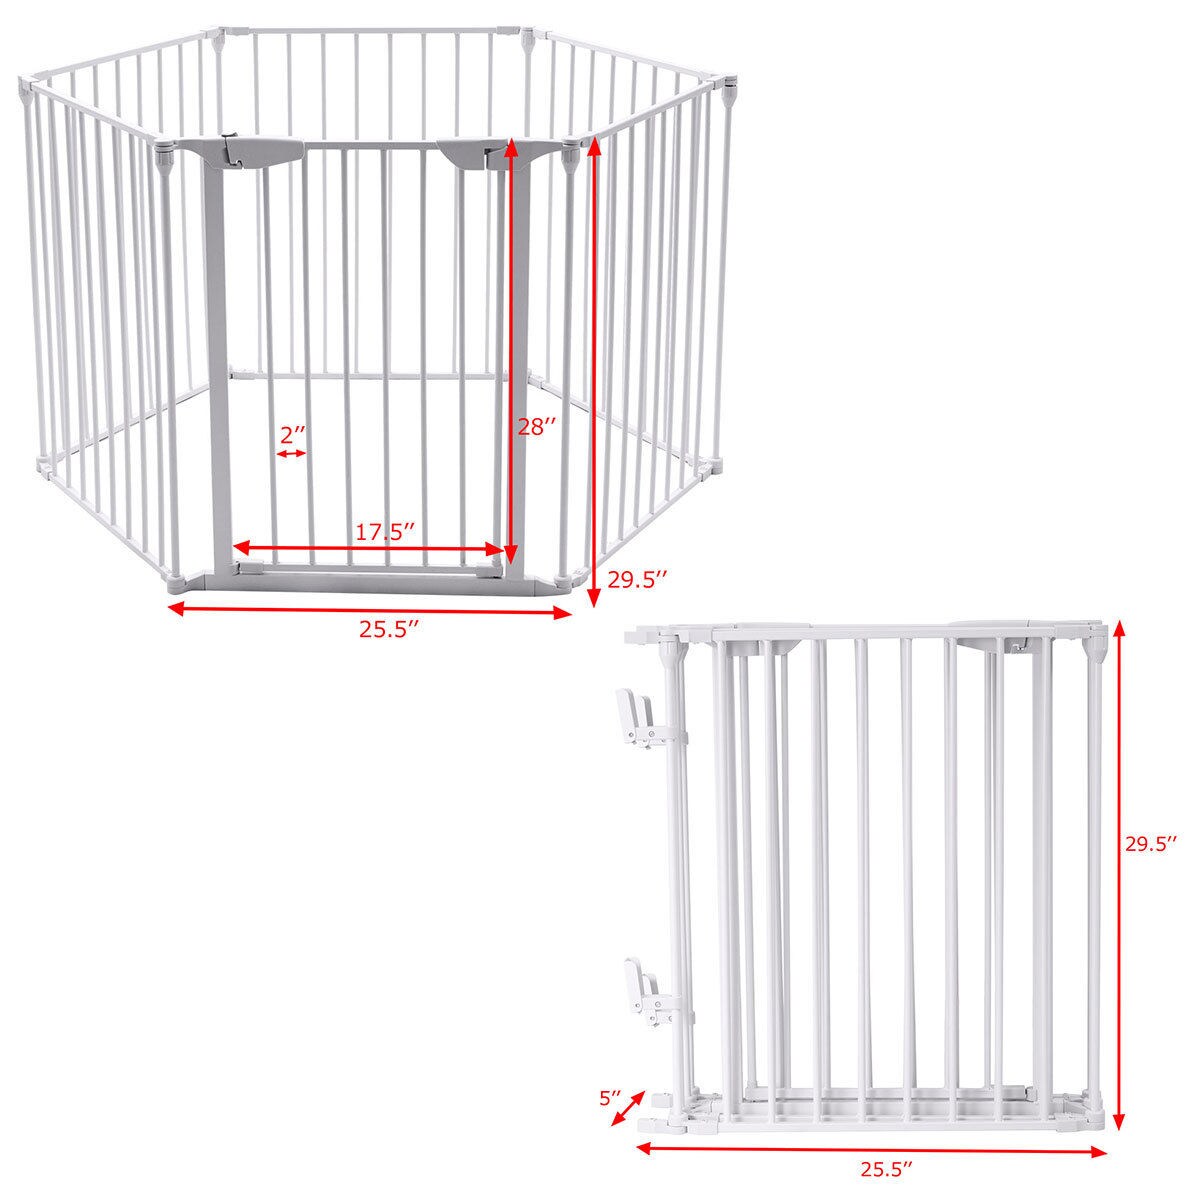 8 Panel Metal Gate Baby Pet Fence Safe Playpen Barrier Wall-mount Multifunction